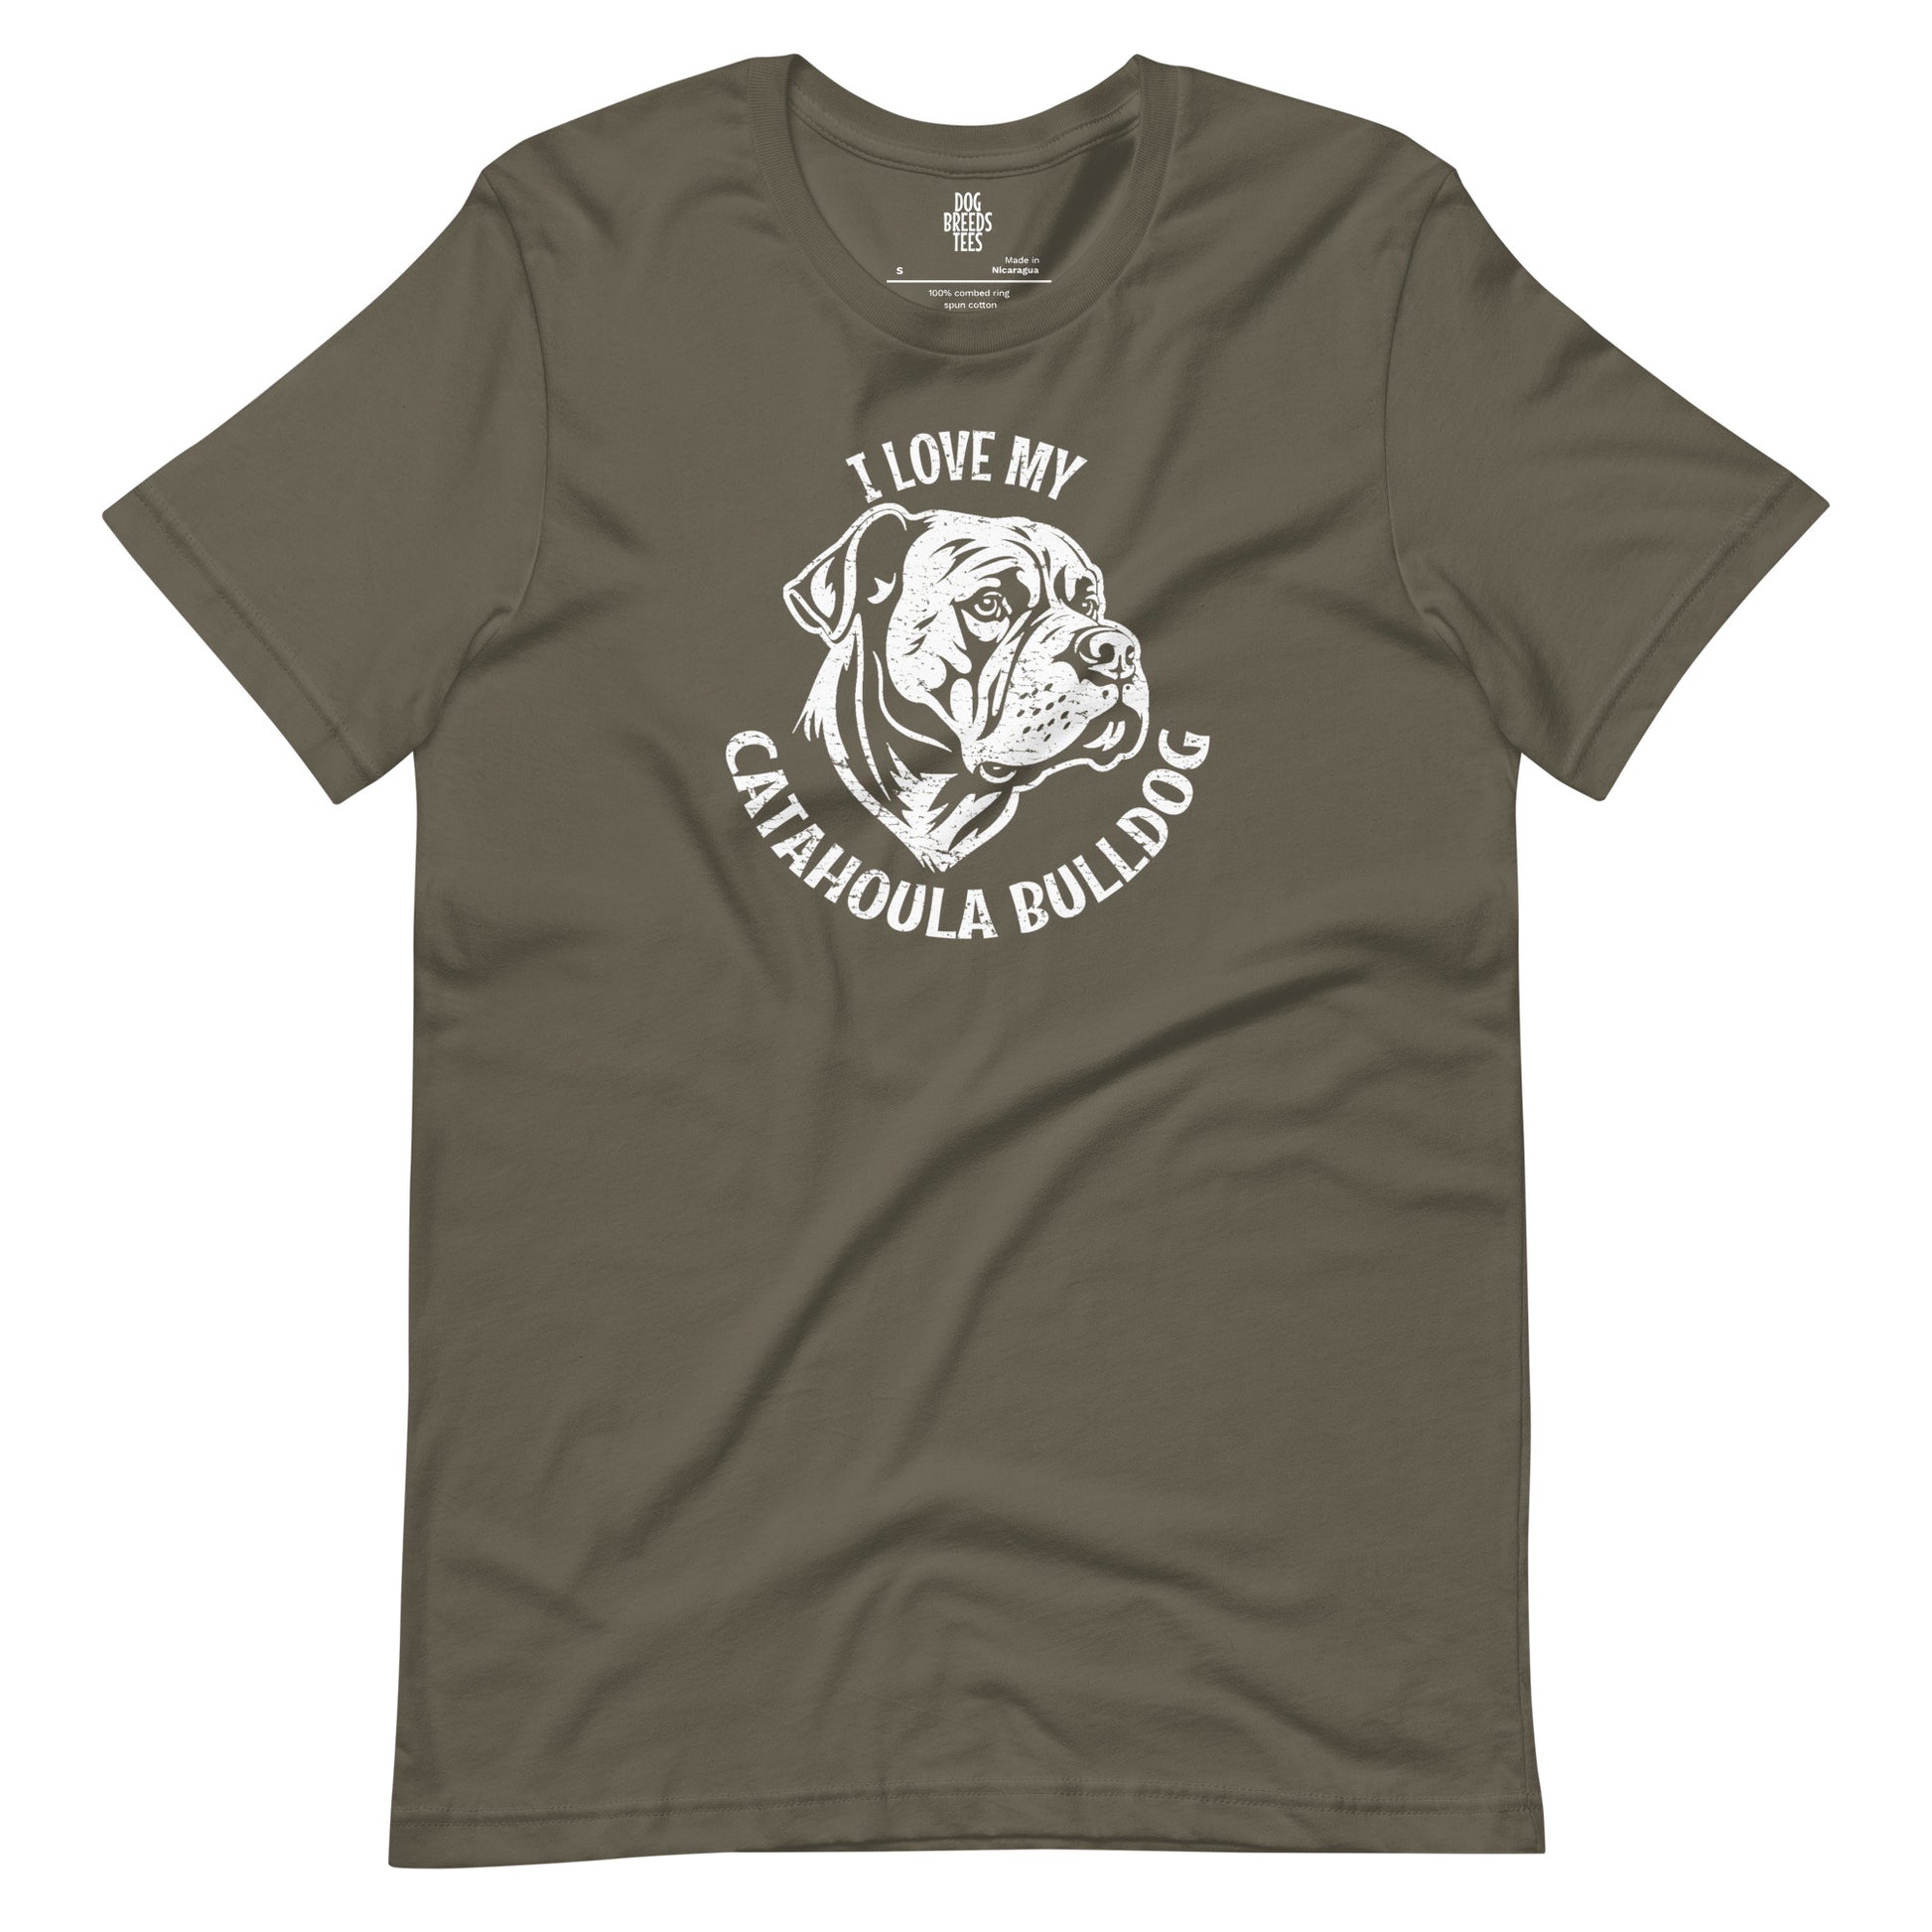 Catahoula Bulldog Shirt, Catahoula Bulldog gift, gift for dog mom, custom dog gift, dog owner gift, pet memorial gift